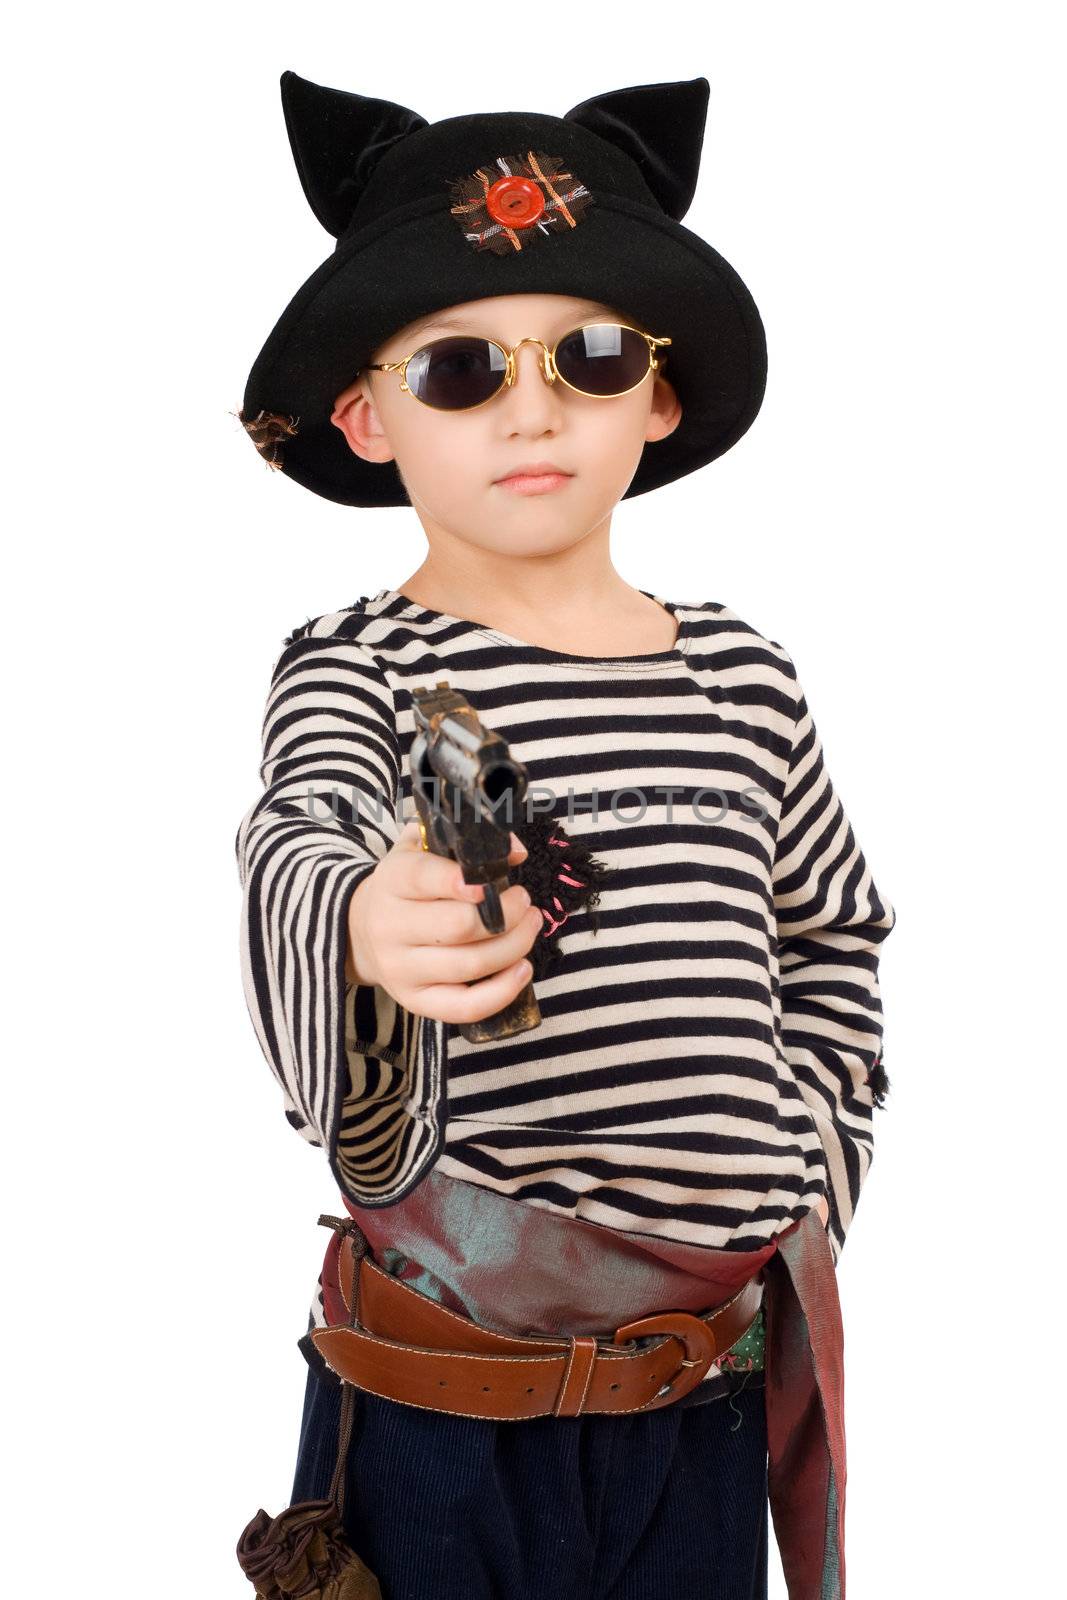 boy dressed as pirate by acidgrey